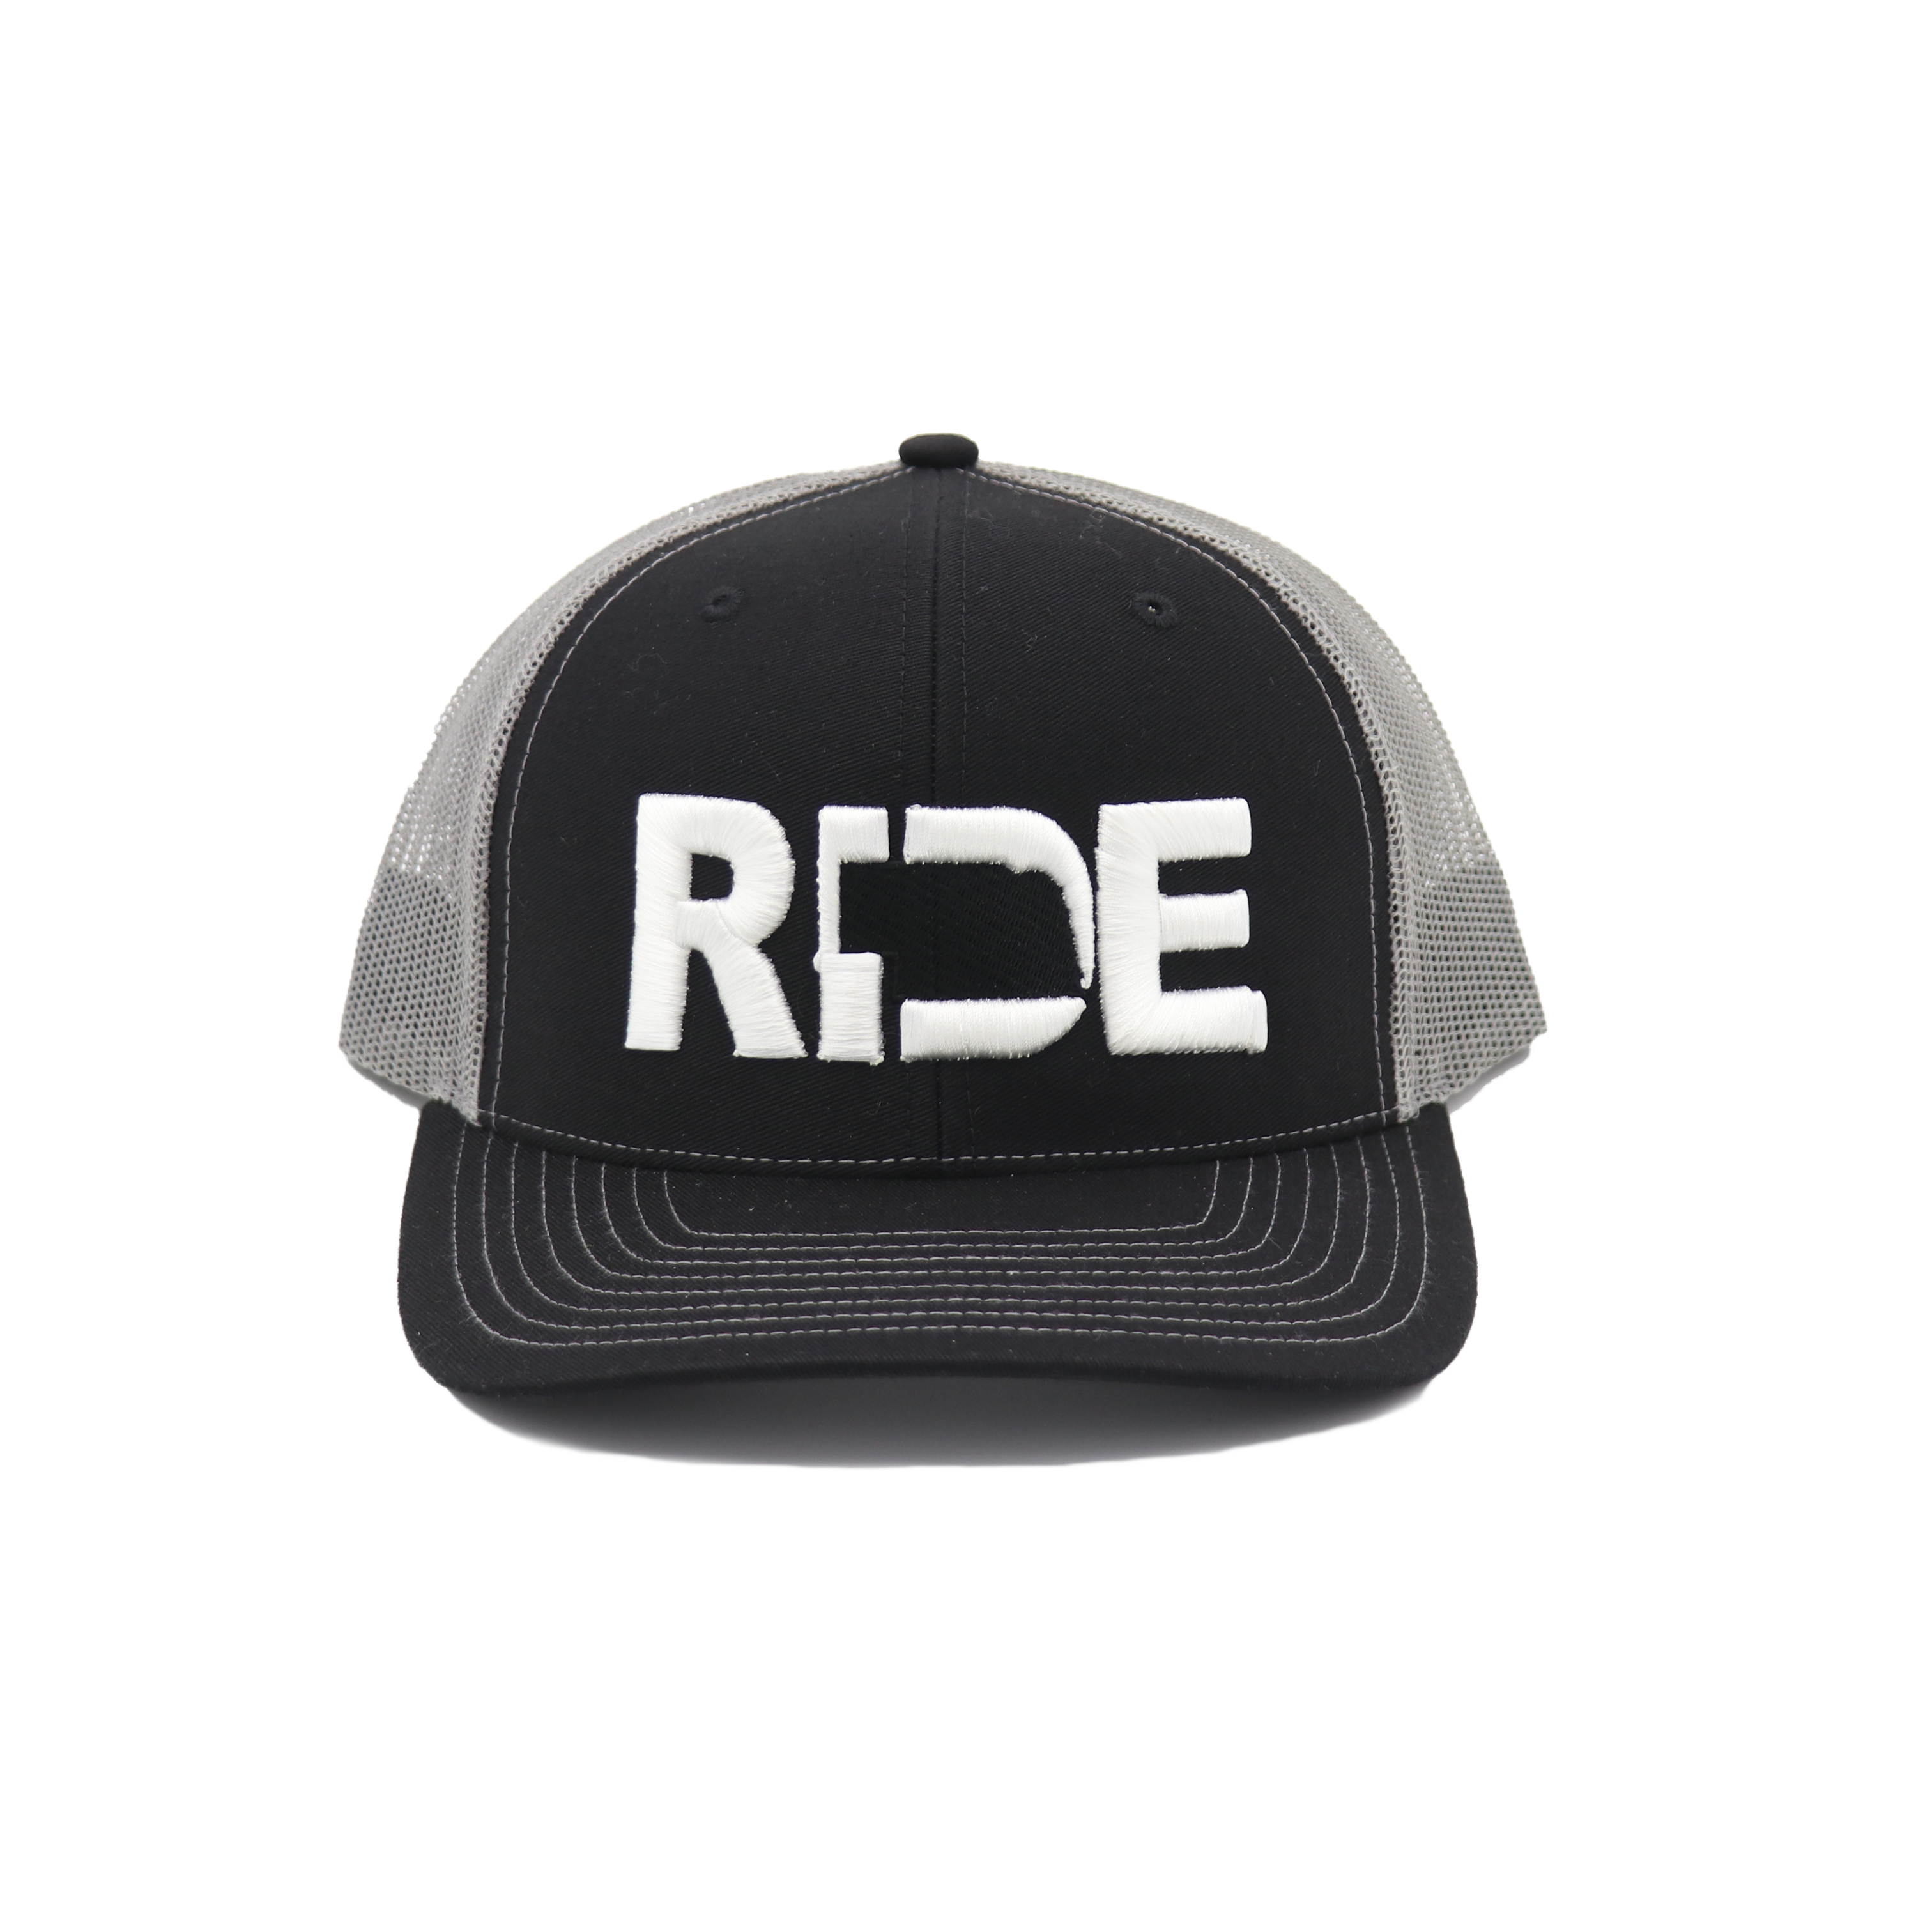 Ride Nebraska Classic Embroidered Snapback Trucker Hat Black/Gray